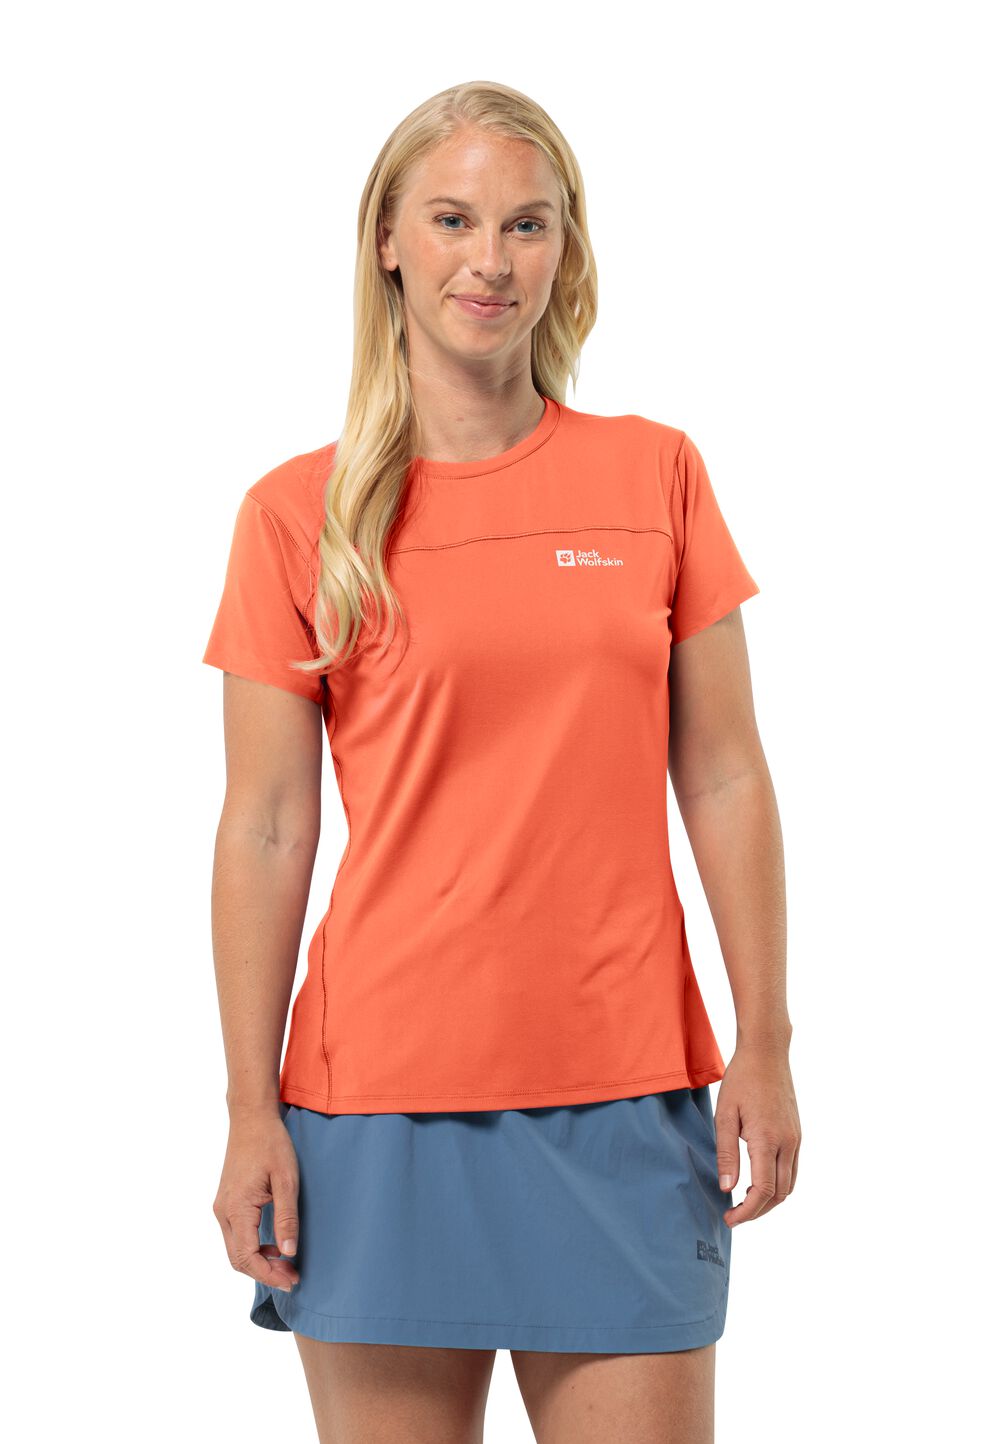 Jack Wolfskin Prelight Chill T-Shirt Women Functioneel shirt Dames S rood digital orange